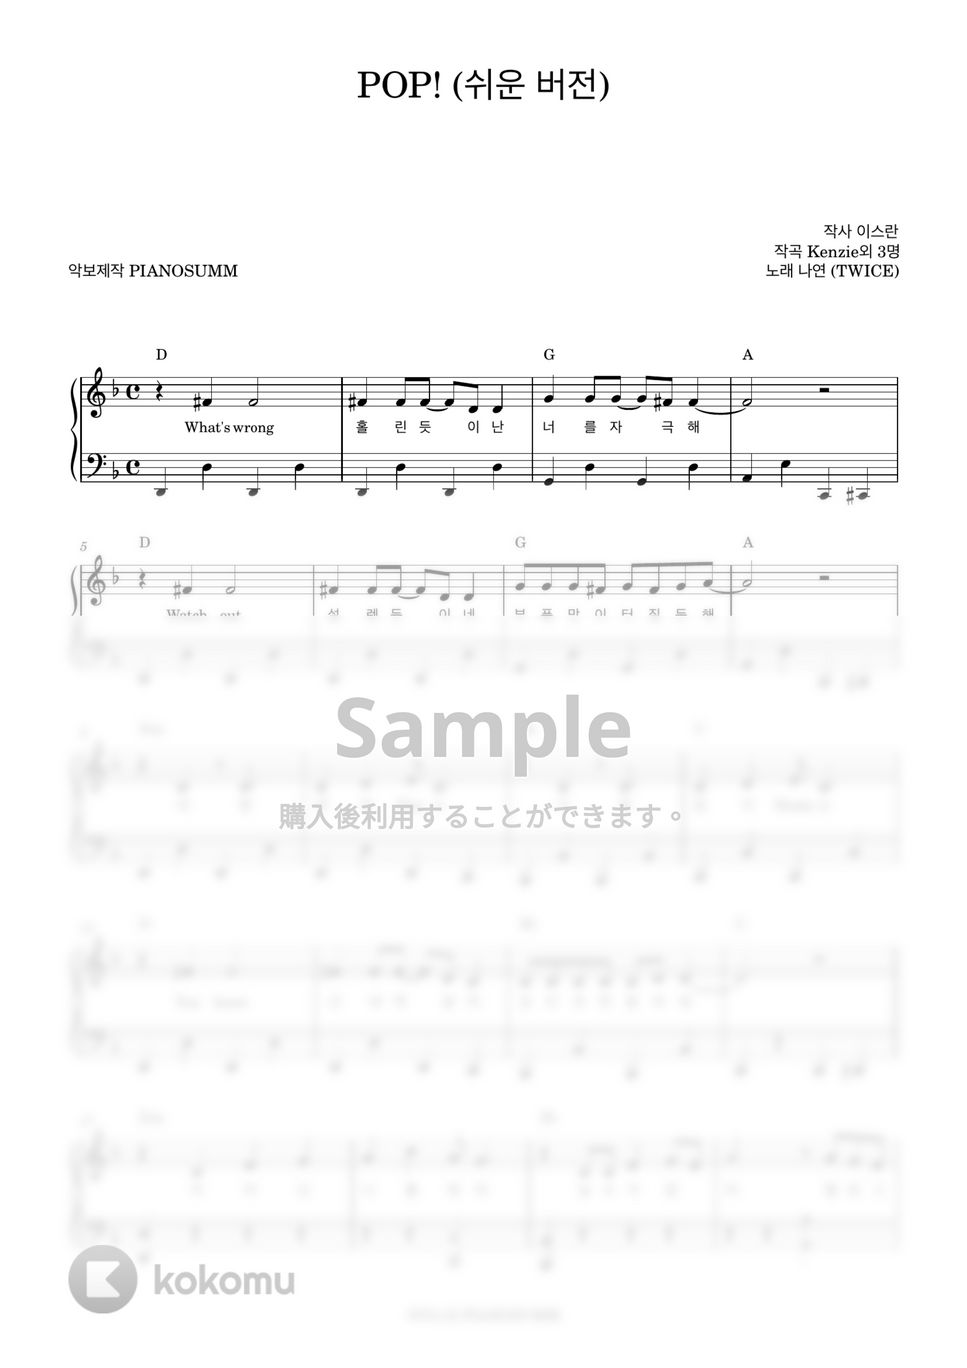 NAYEON (TWICE) - POP! (Easy ver.) by PIANOSUMM